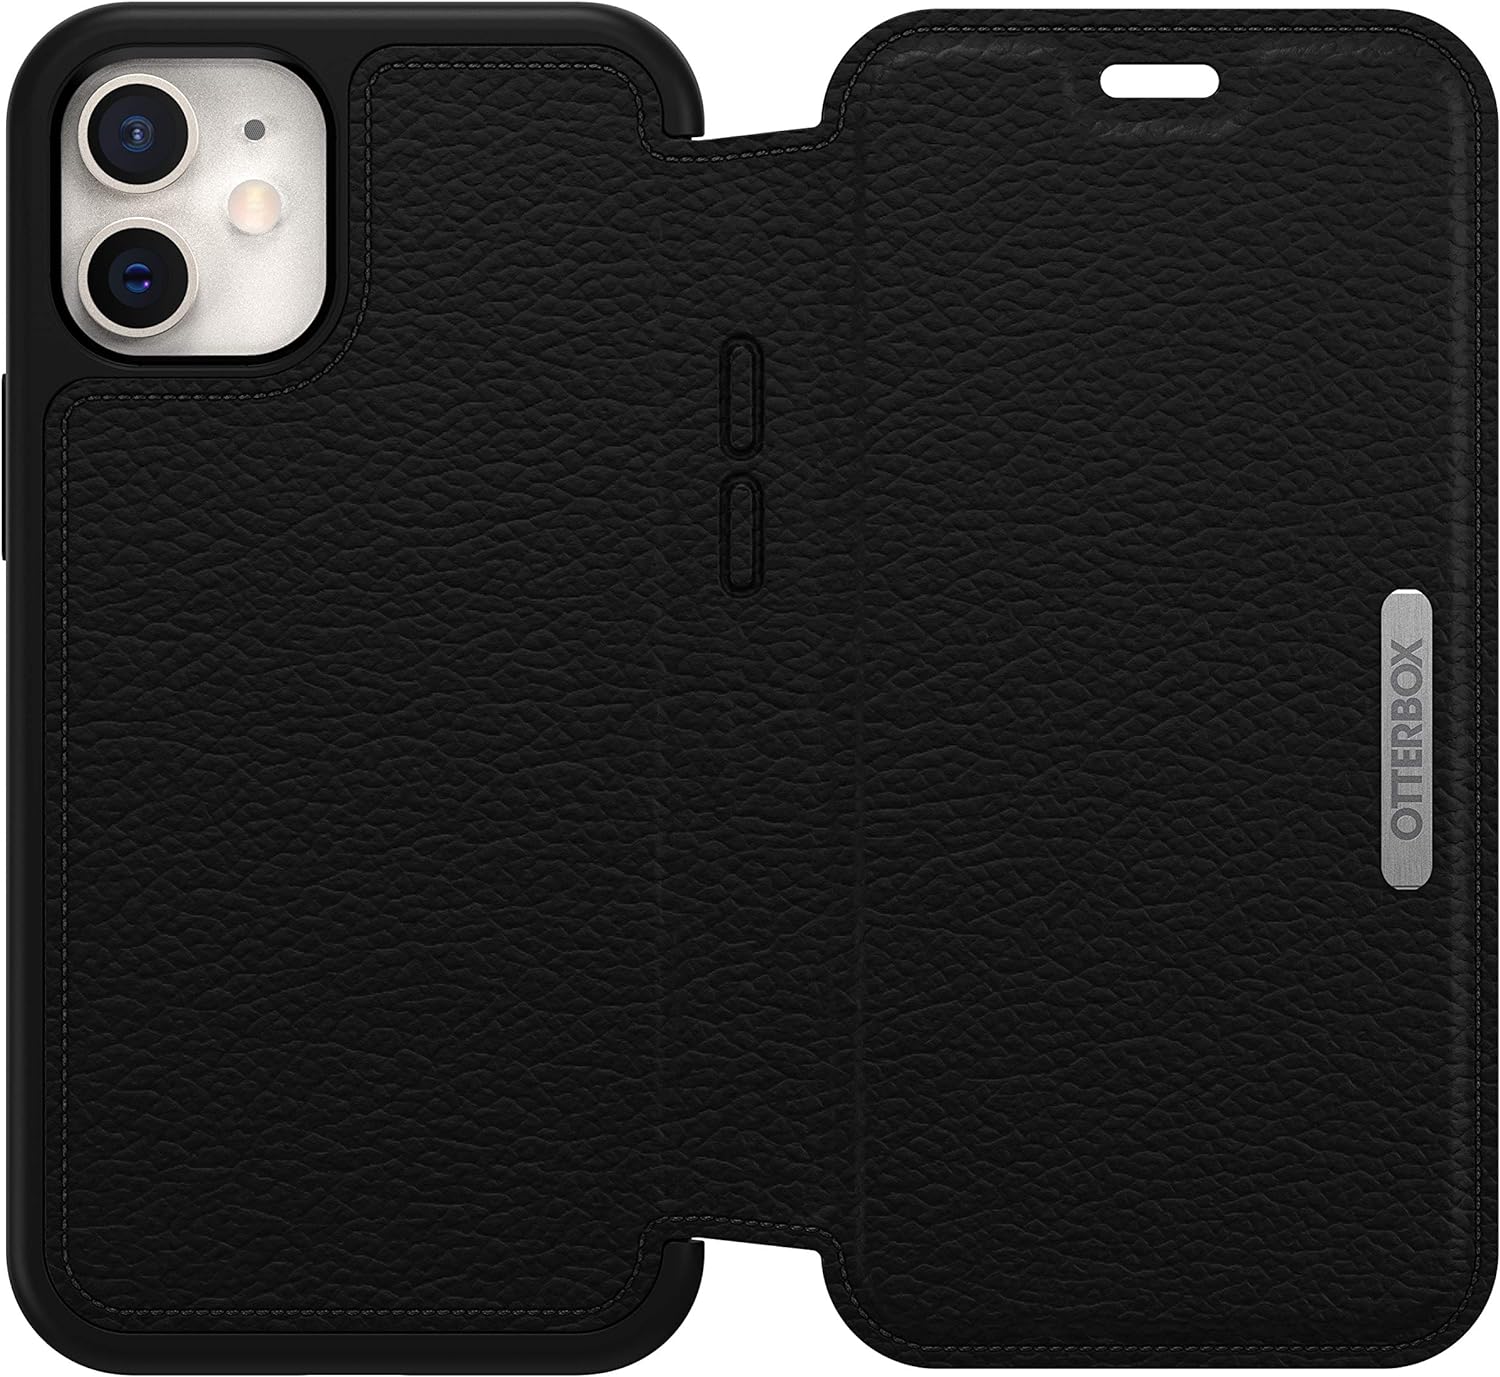 OtterBox Case for iPhone 12 mini Black 5340